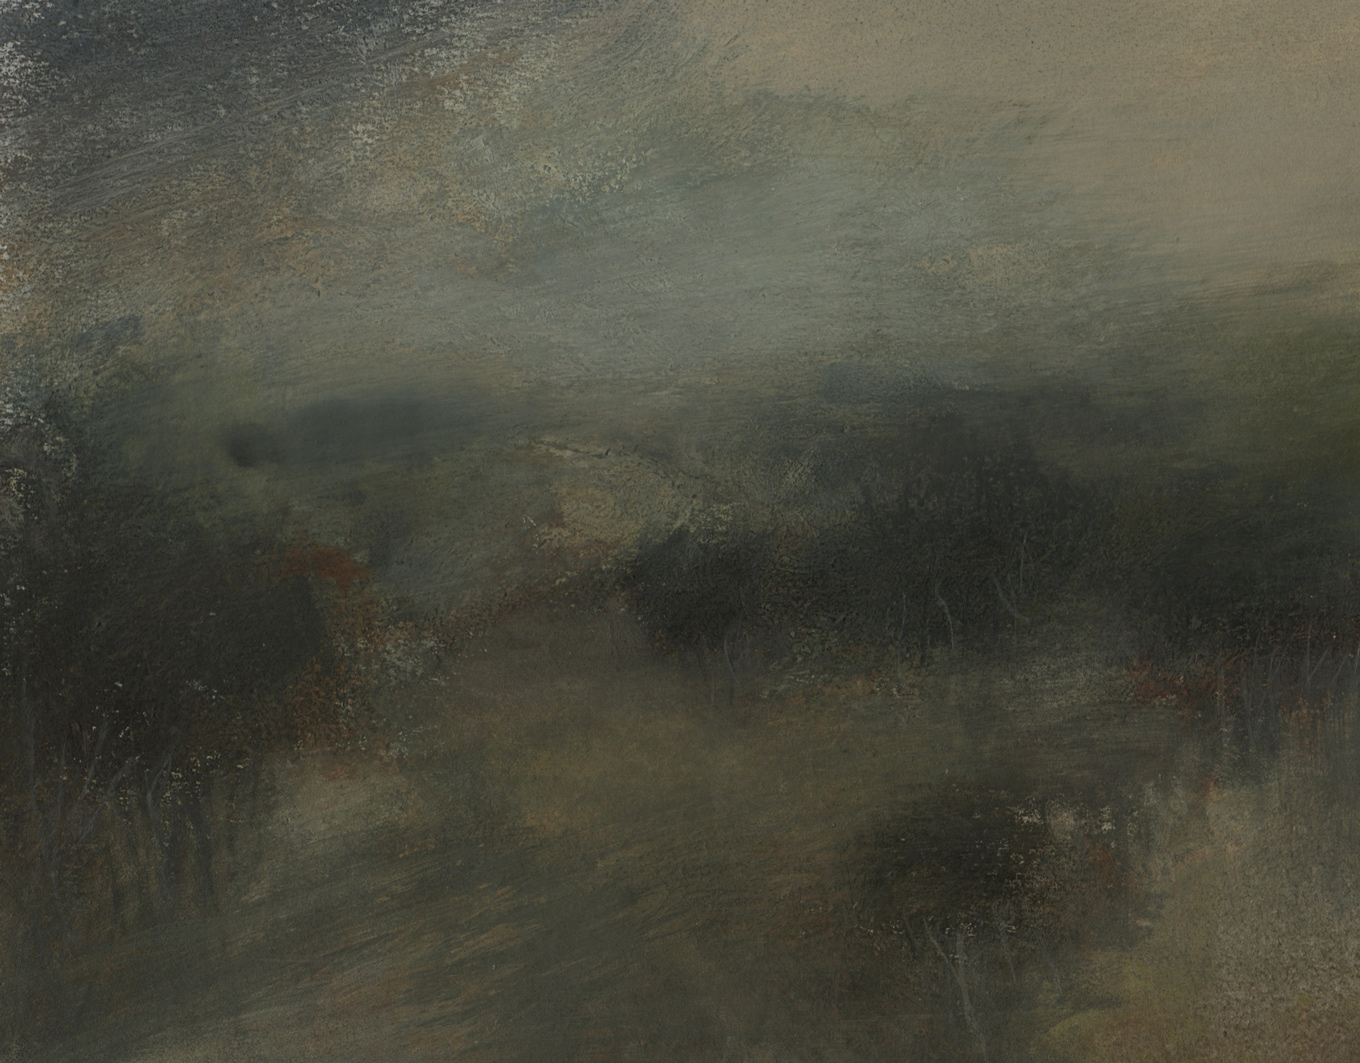 Nicholas Herbert, British Artist - Landscape L961, Sharpenhoe Series, Below the Escarpment, The Chiltern Hills, contemporary mixed media painting